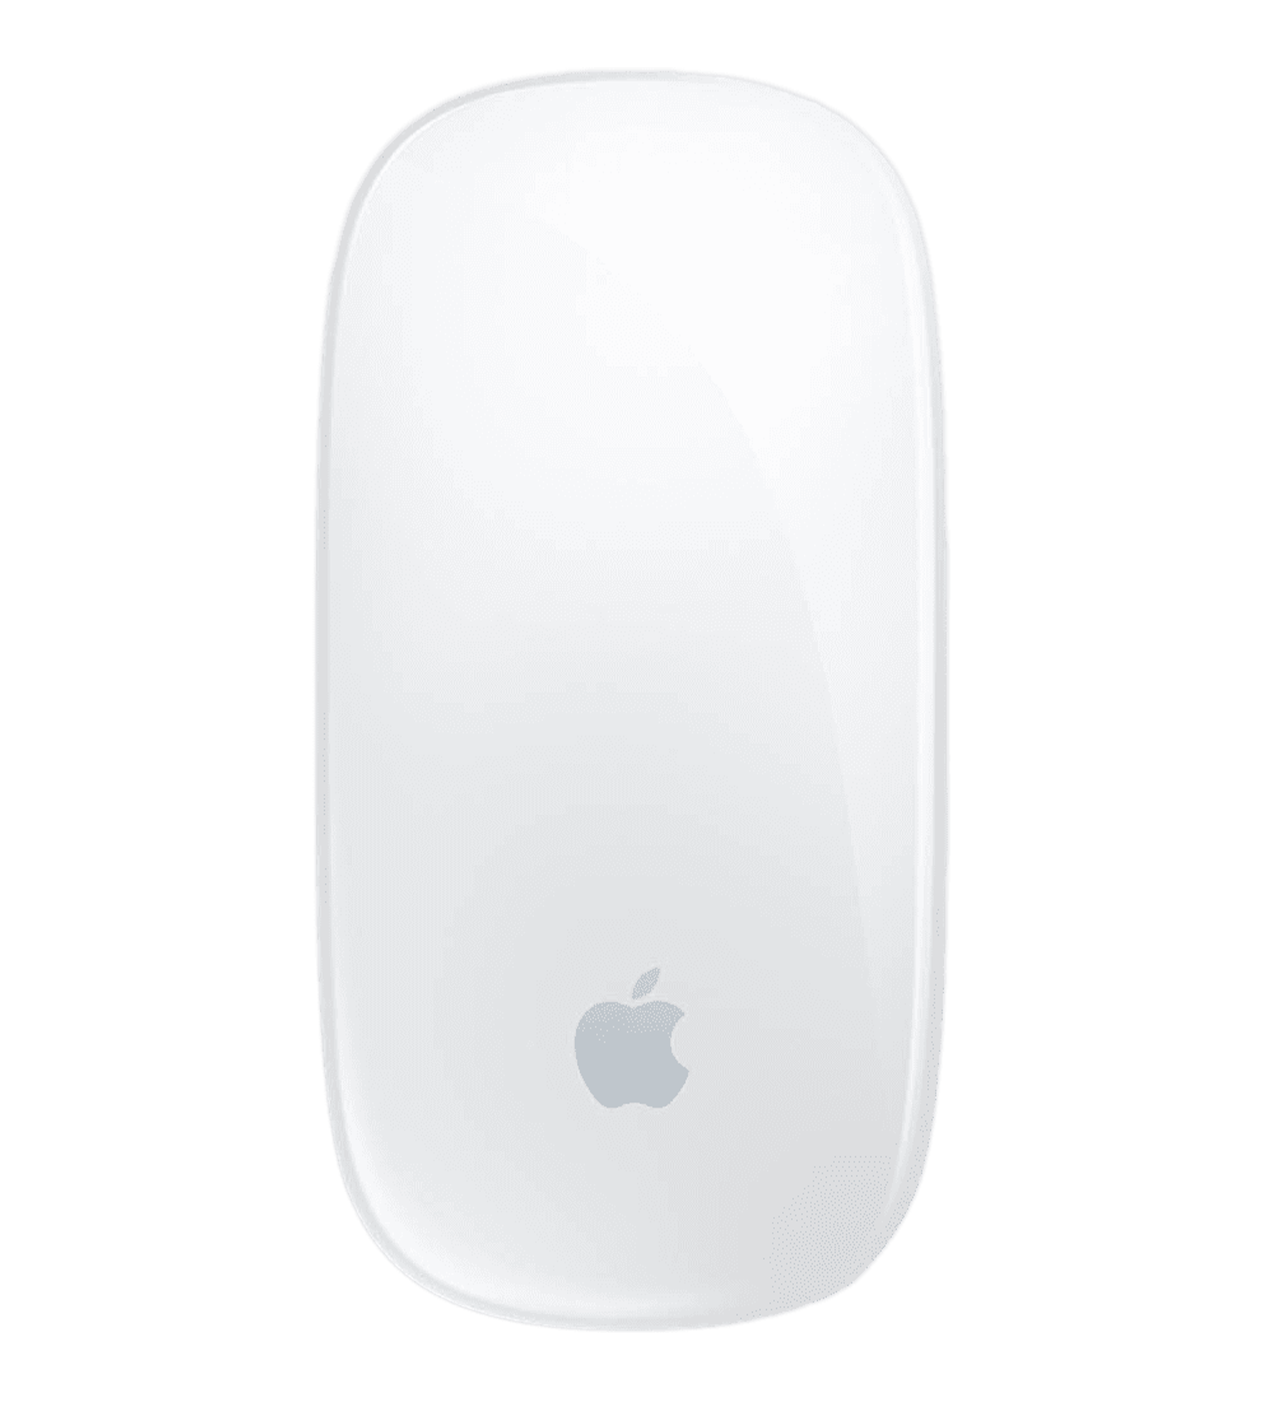 Беспроводная мышь Apple Magic Mouse 3